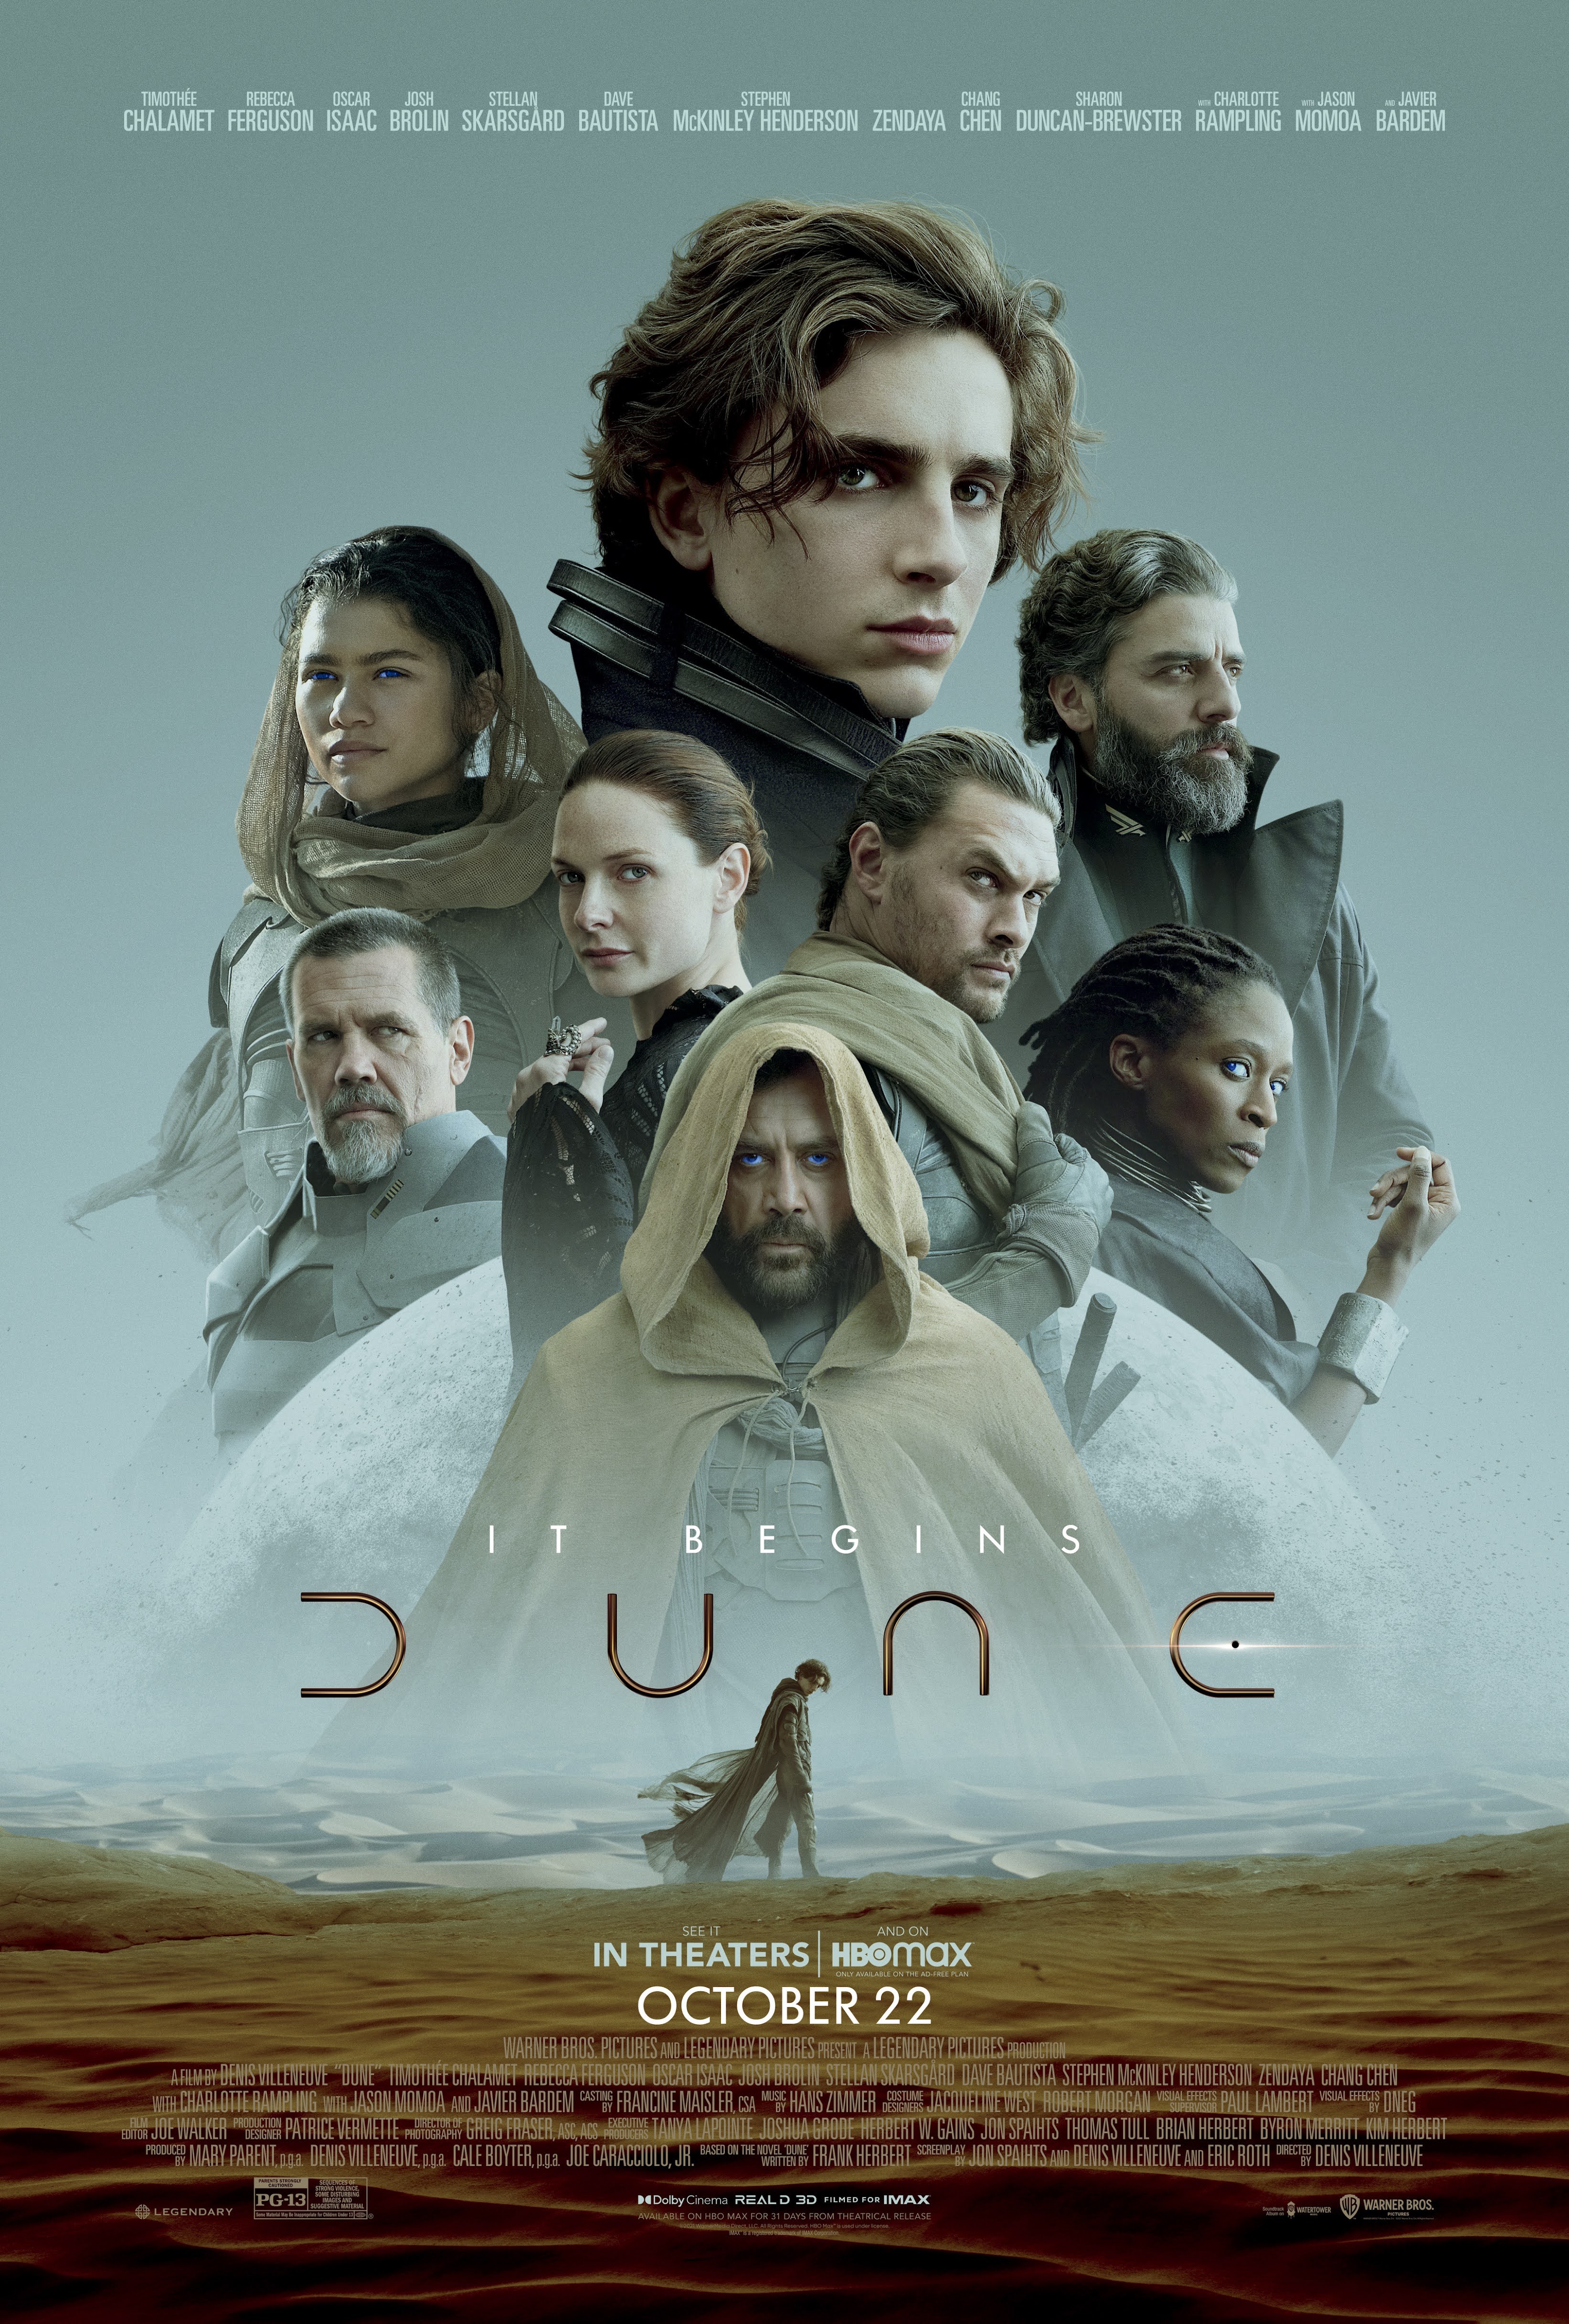 Dune (film) Warner Bros image pic